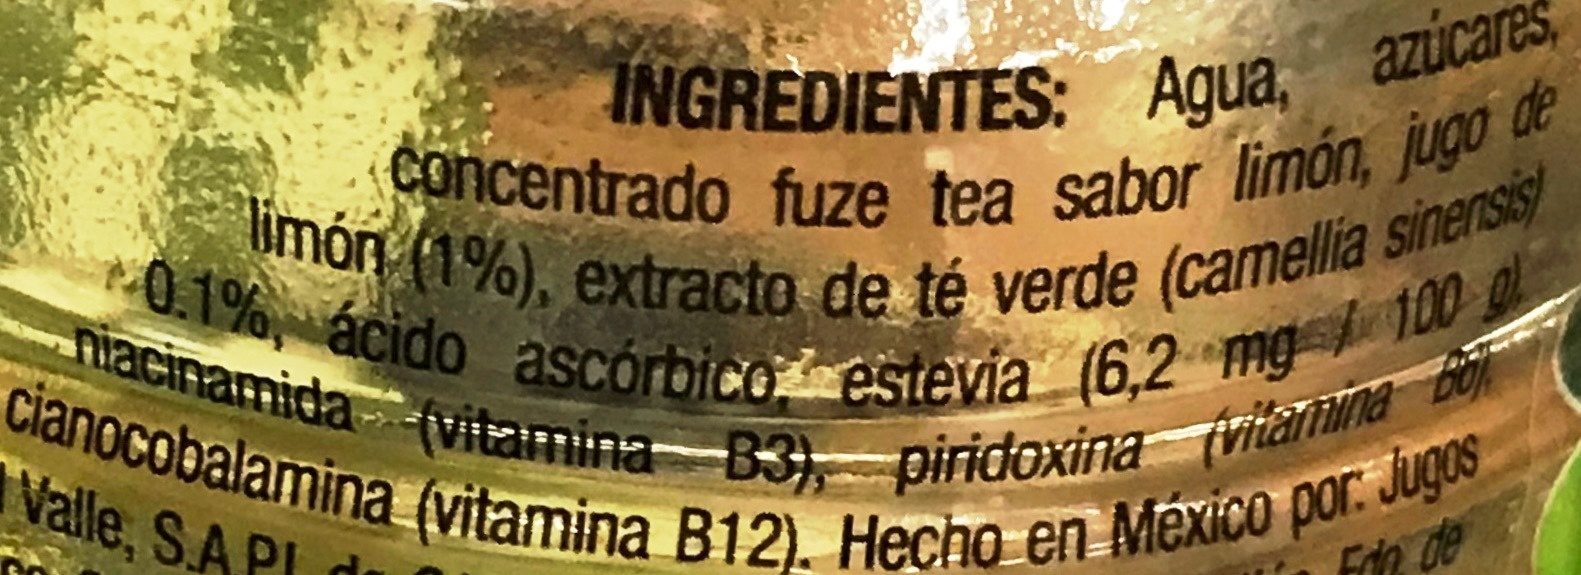 Fuze Tea Sabor Limón - Ingredients - es